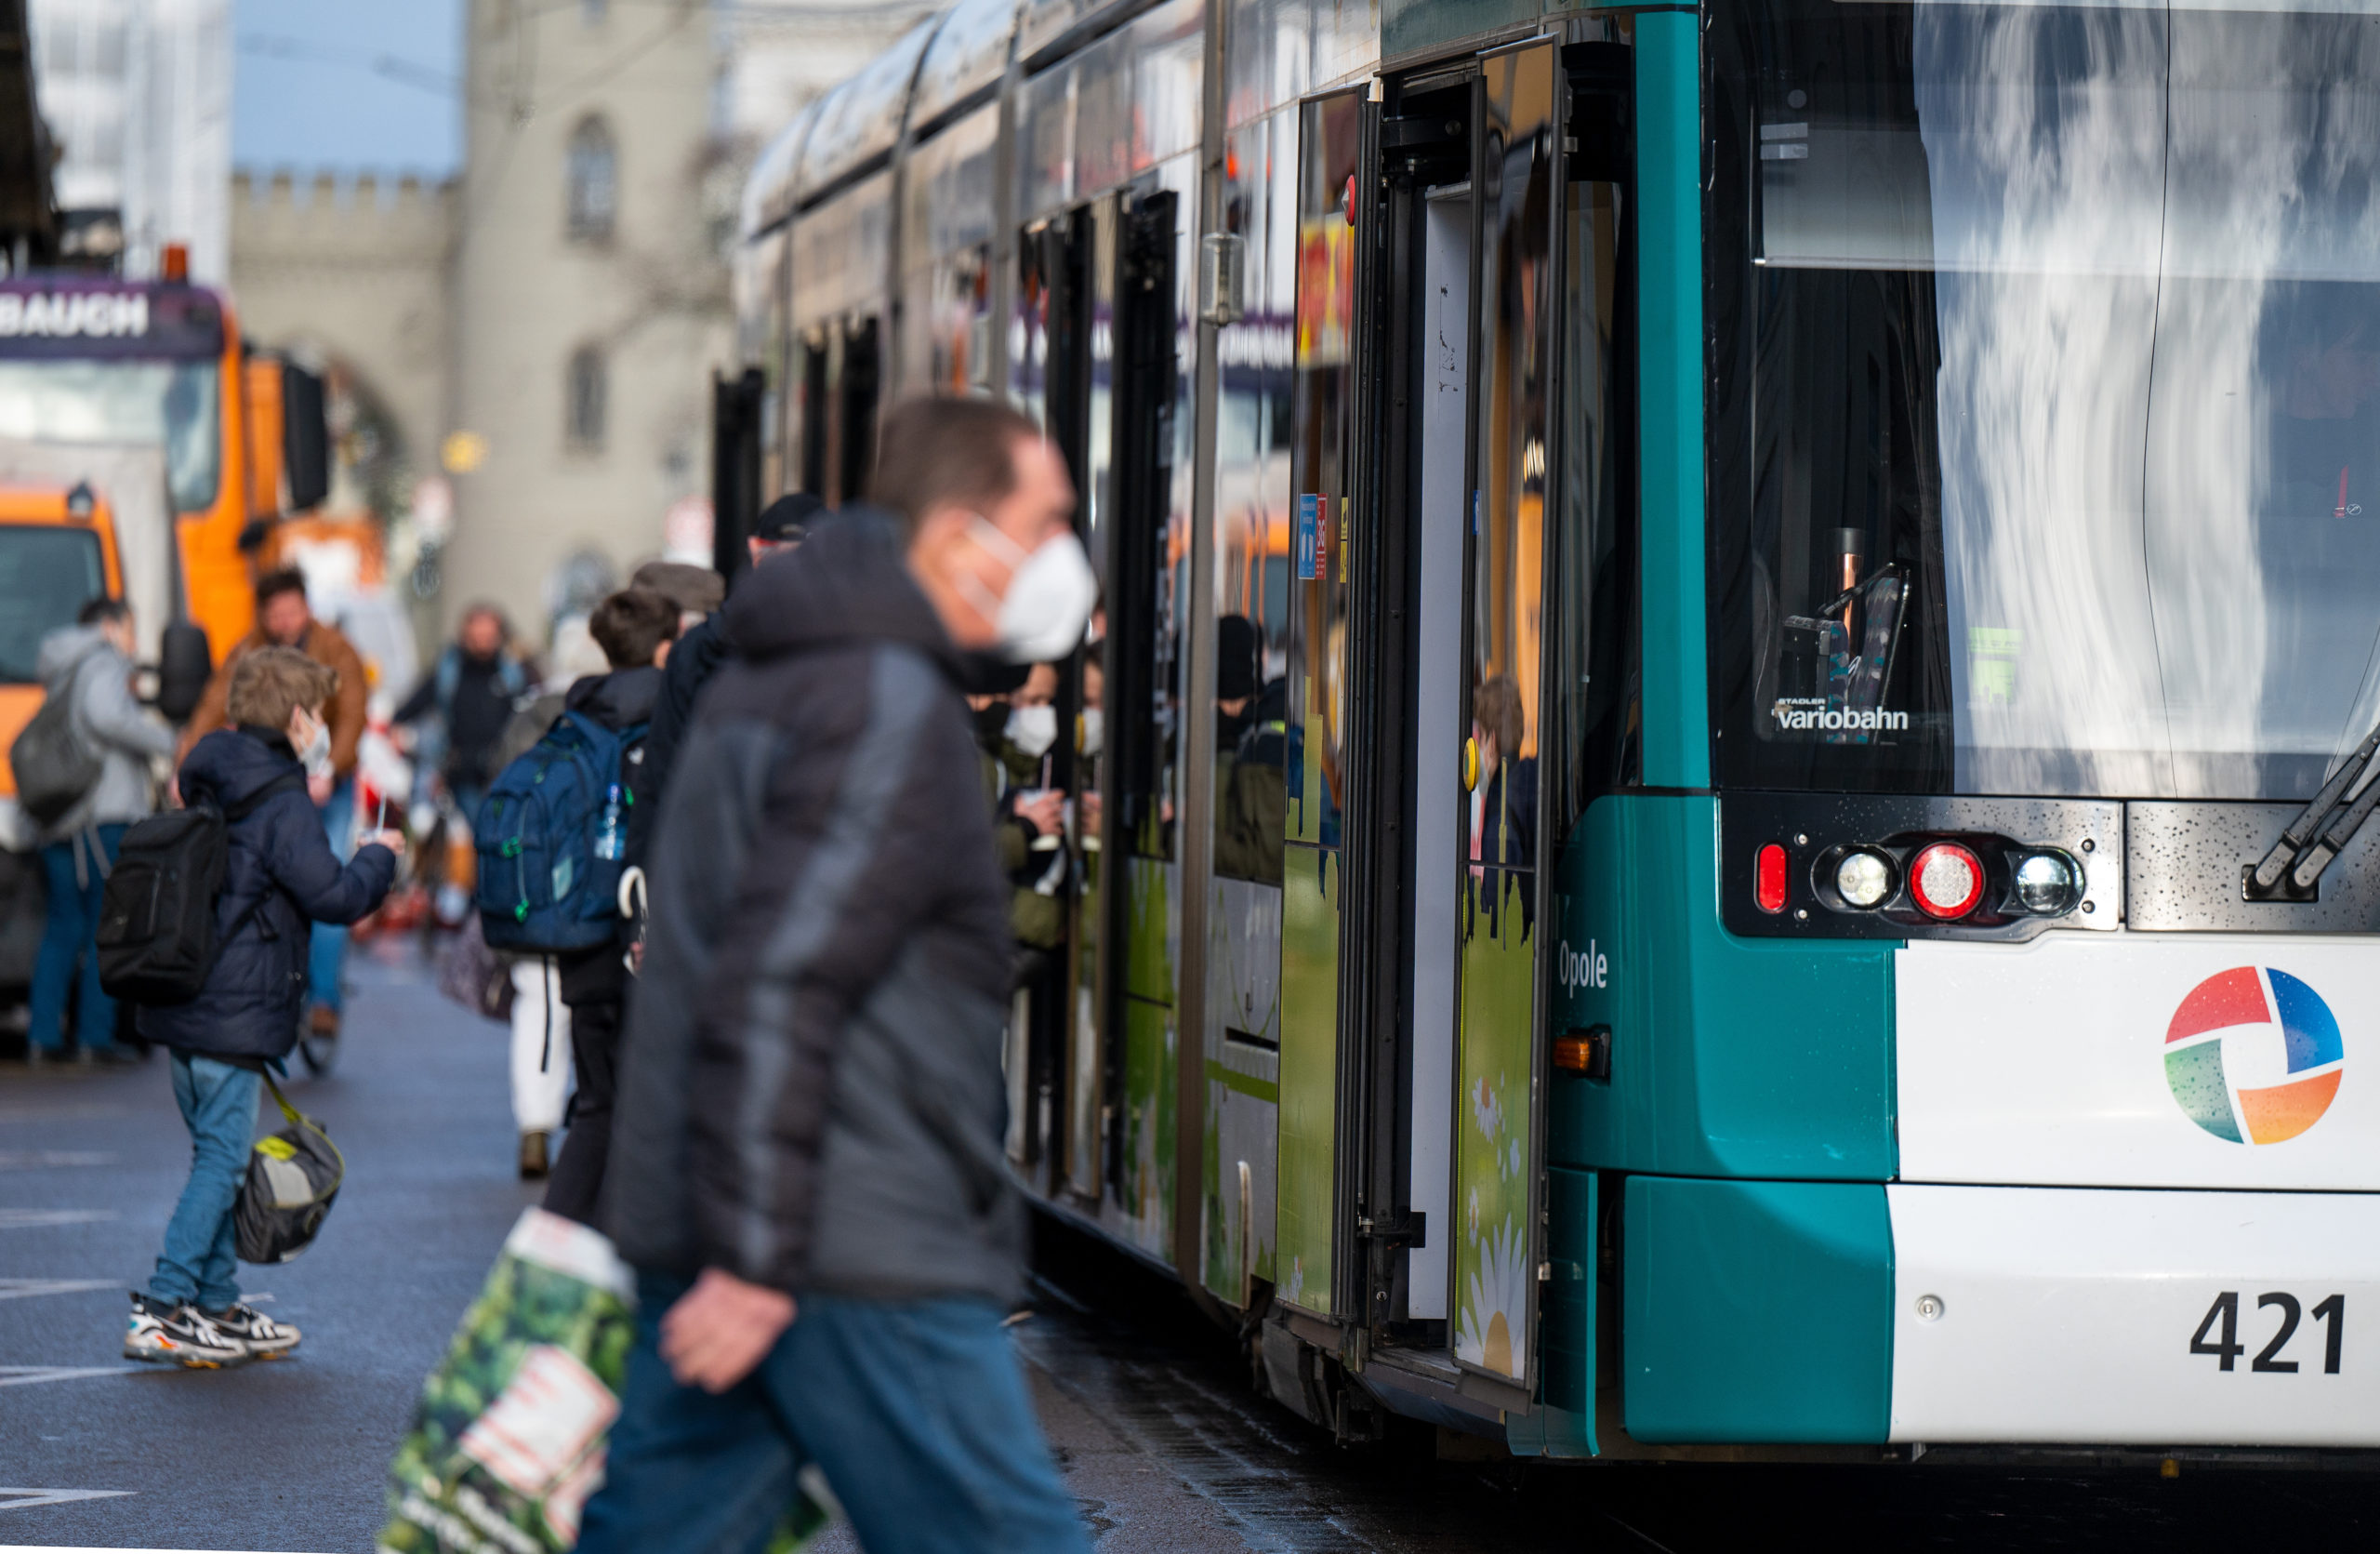 Akankah Jerman segera menghapus masker wajah wajib di transportasi umum?